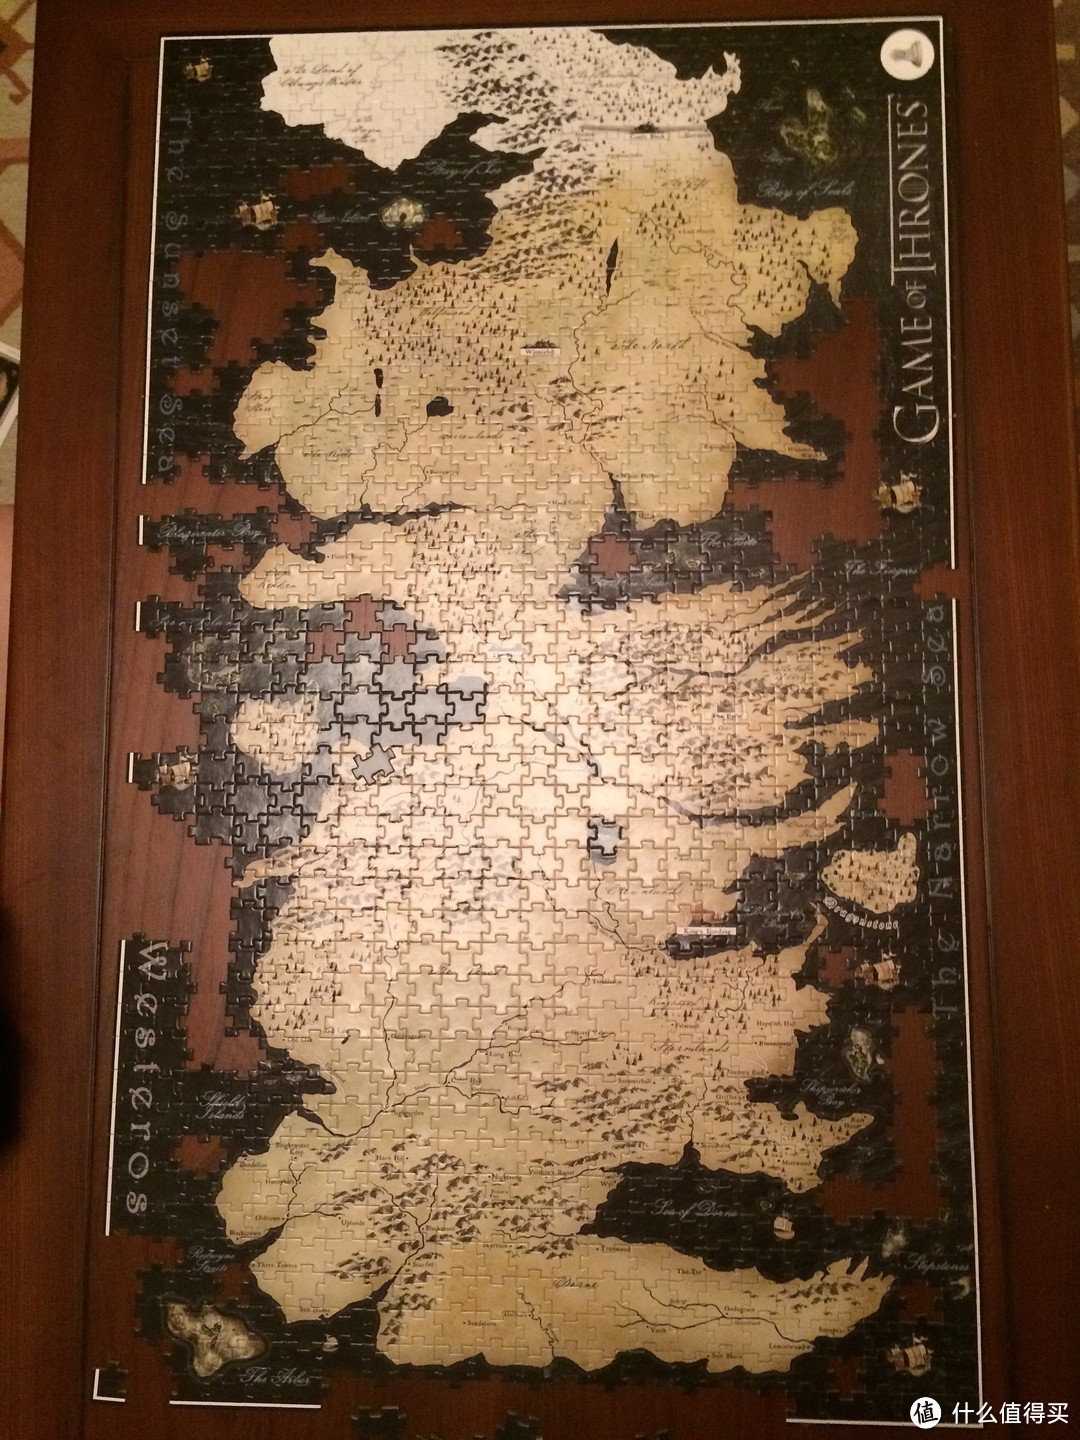 Game of Thrones：Westeros Puzzle 权力的游戏 维斯特洛大陆 立体多层拼图